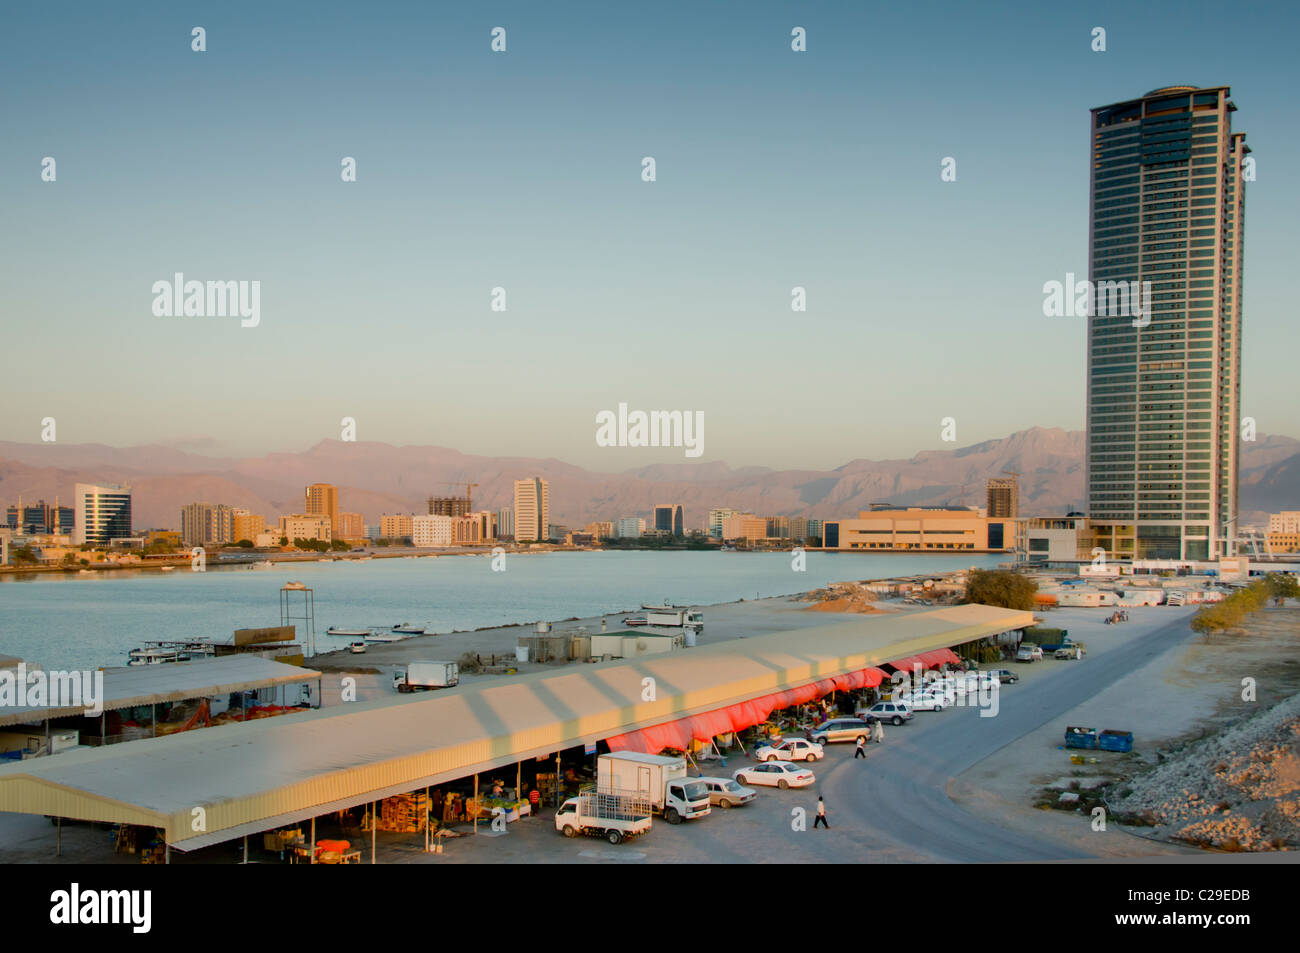 Middle east, UAE, United Arab Emirates, Ras Al Khaimah, Nakheel Stock Photo